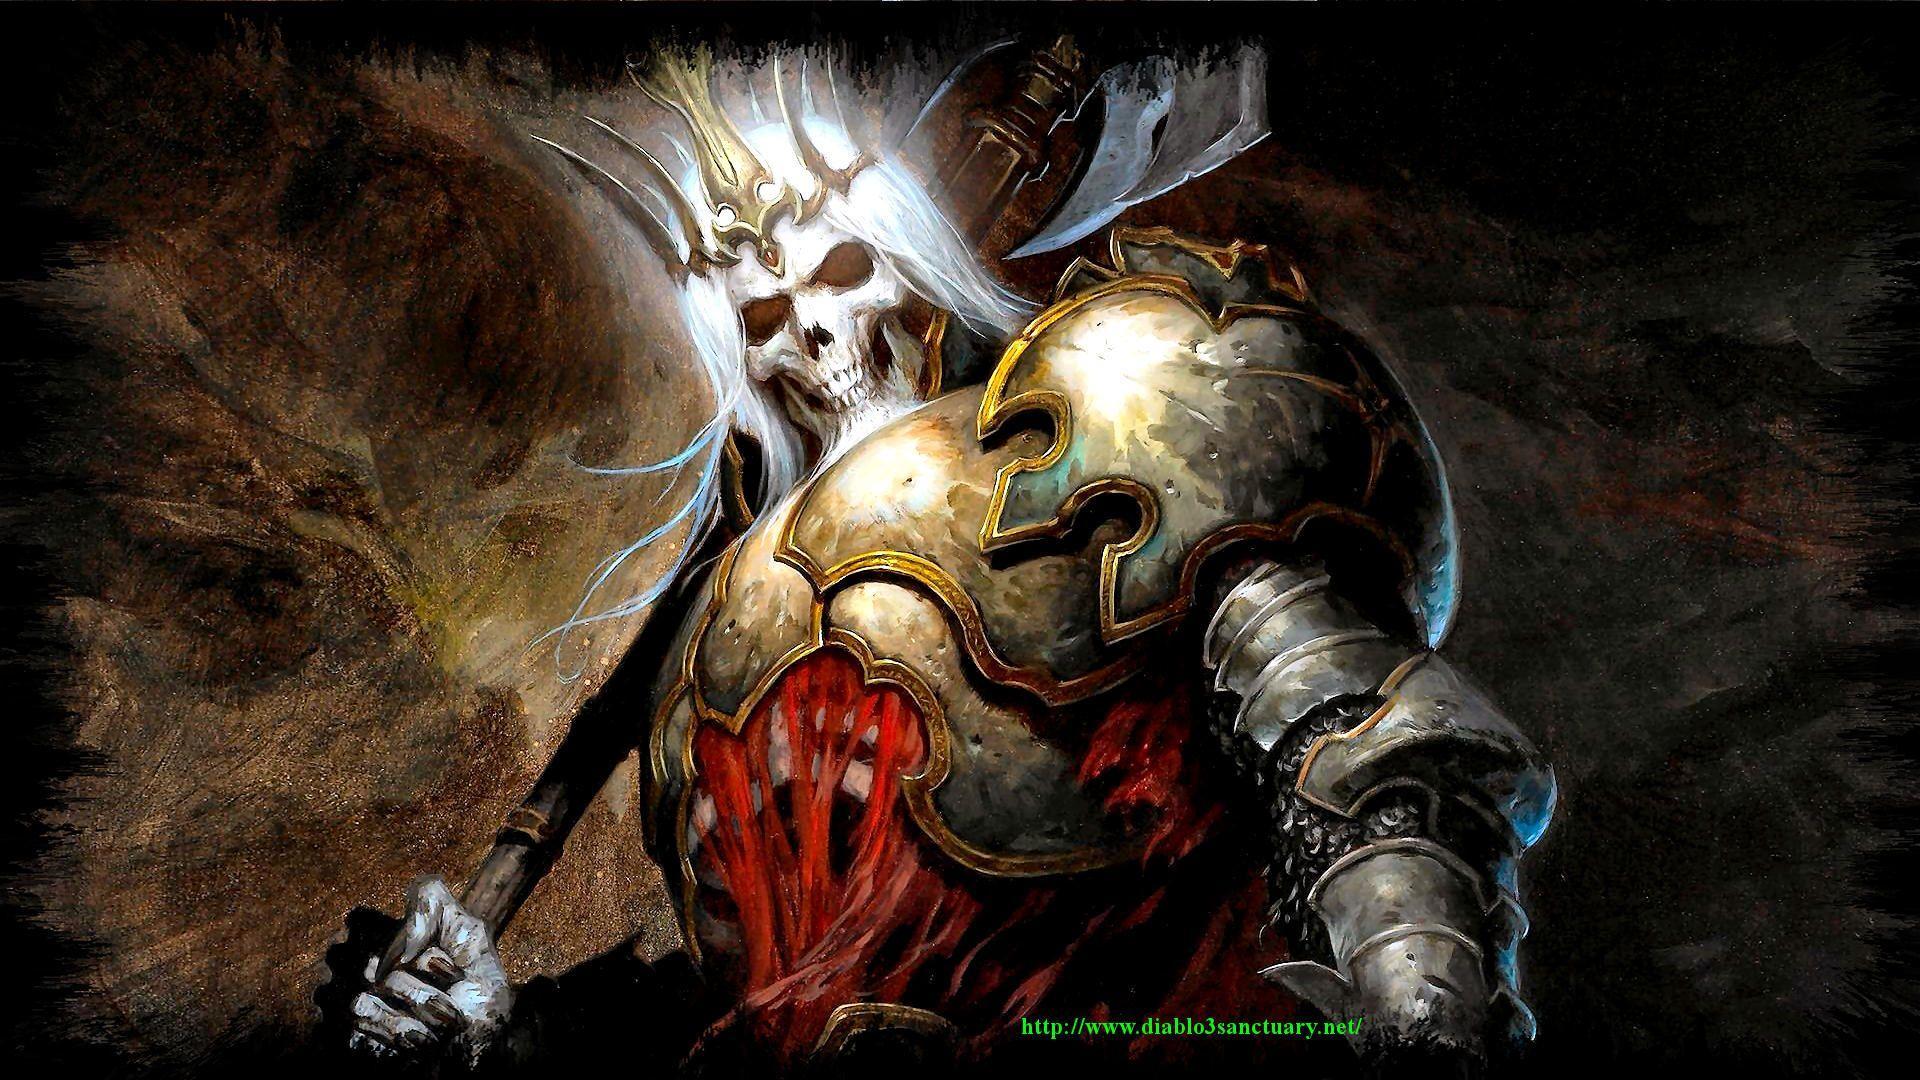 Skeleton King Diablo 3 wallpaper HD free. Diablo